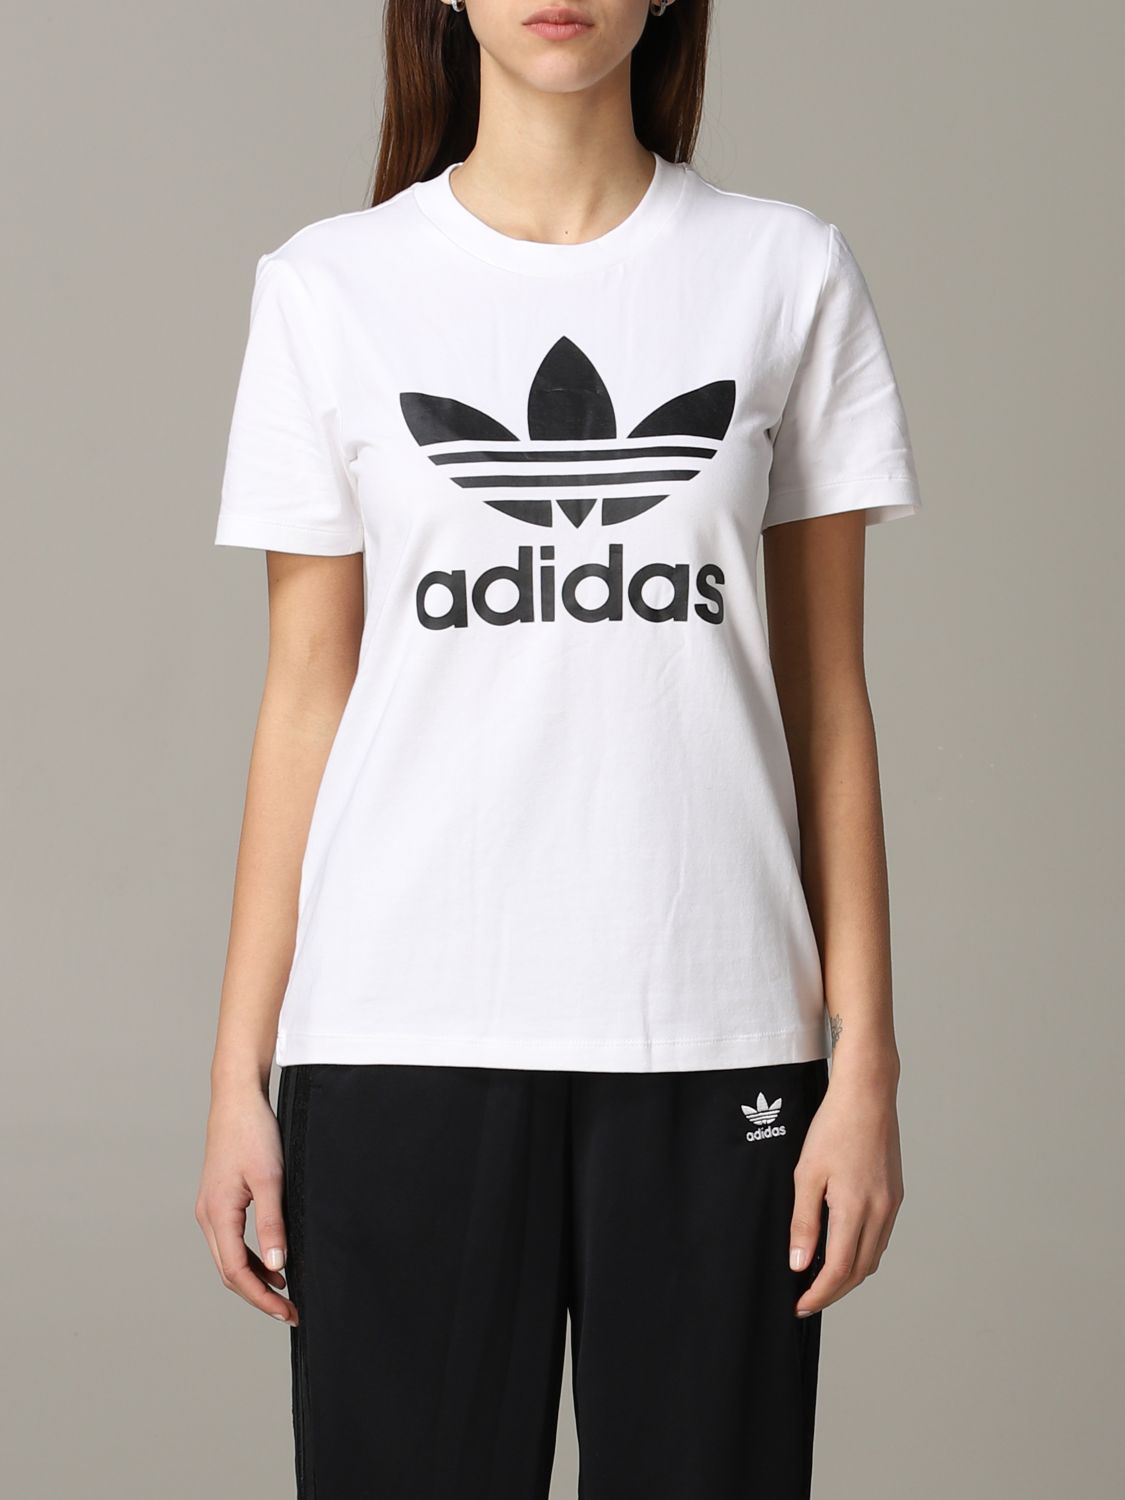 Buy > white adidas t shirt ladies > in stock